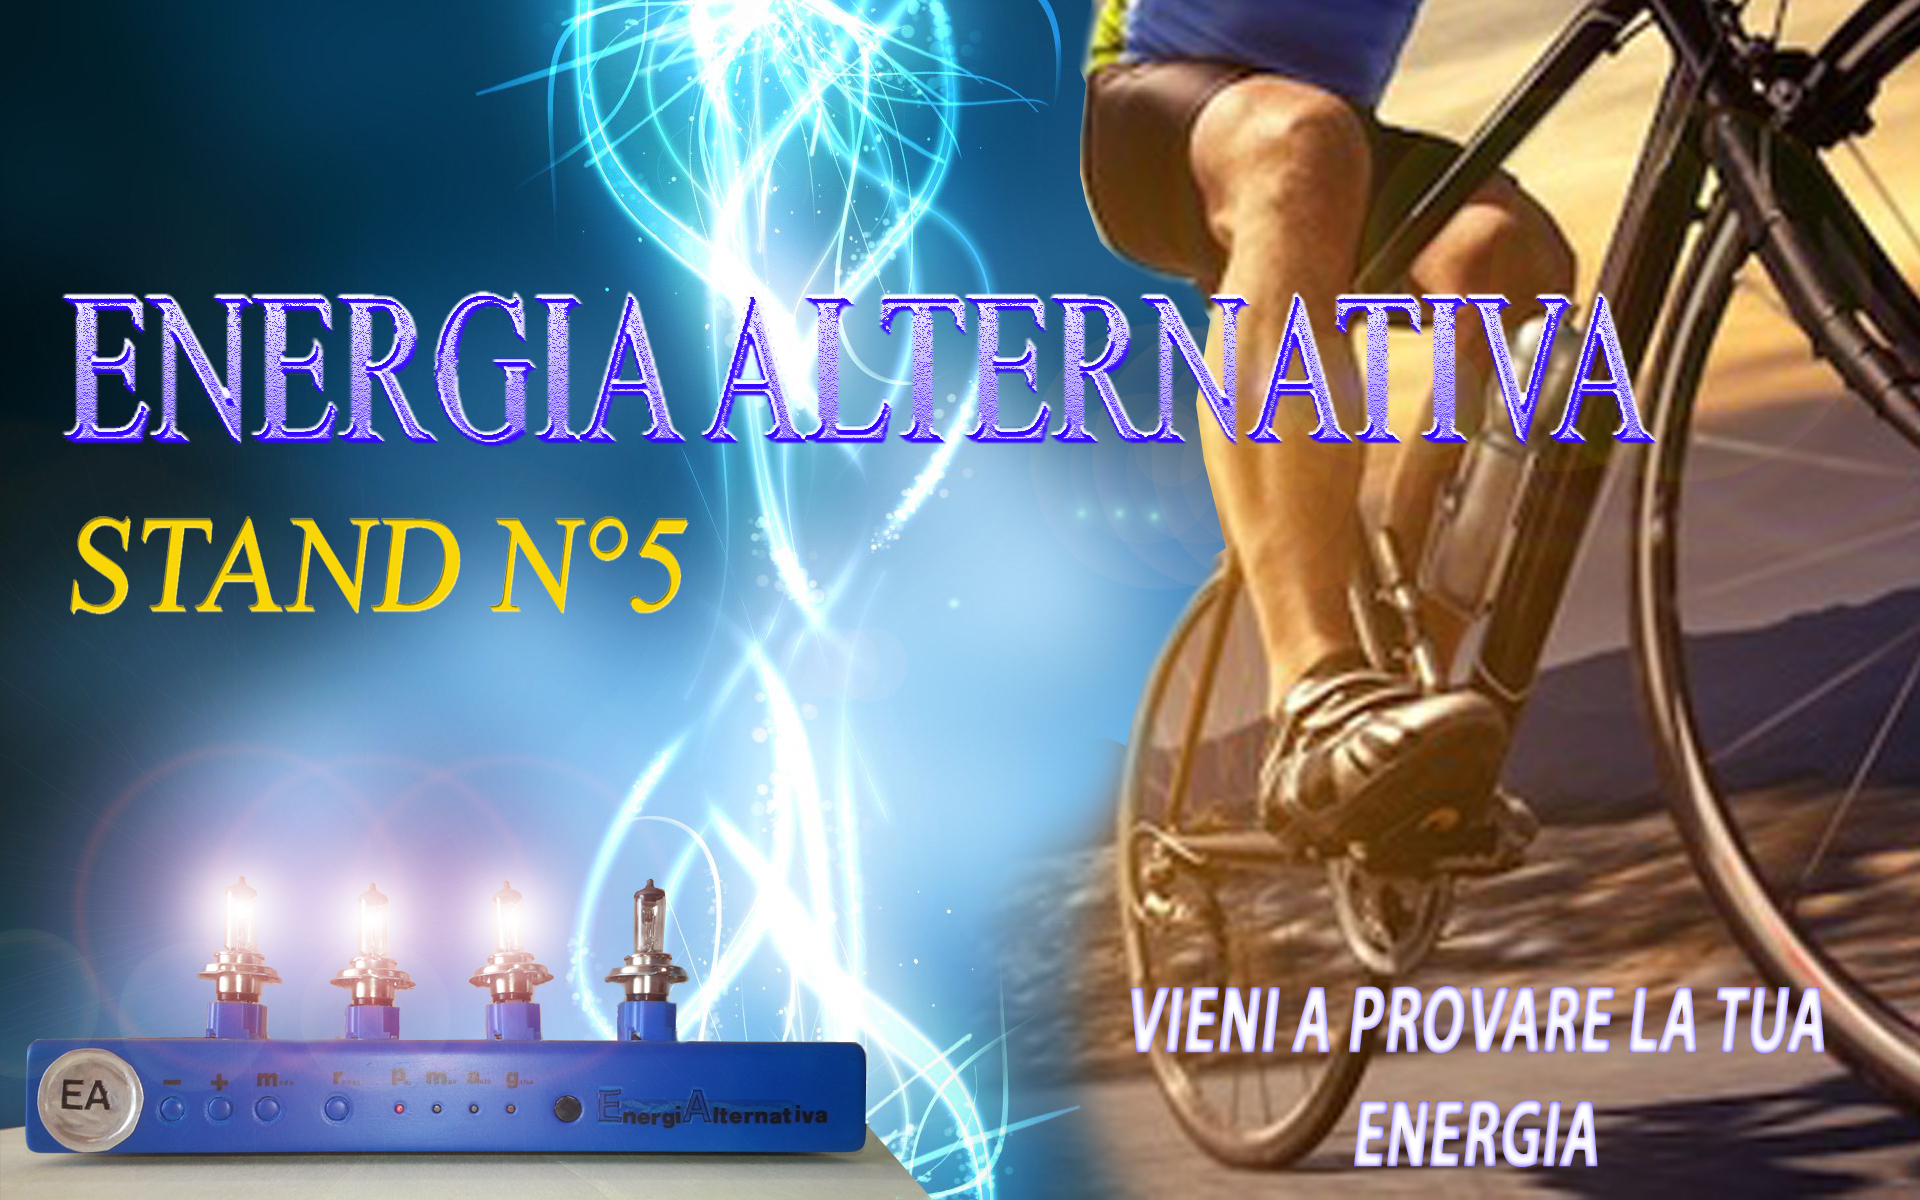 http://www.energialternativa.info/public/newforum/ForumEA/D/Manifesto%20Bicicletta.jpg